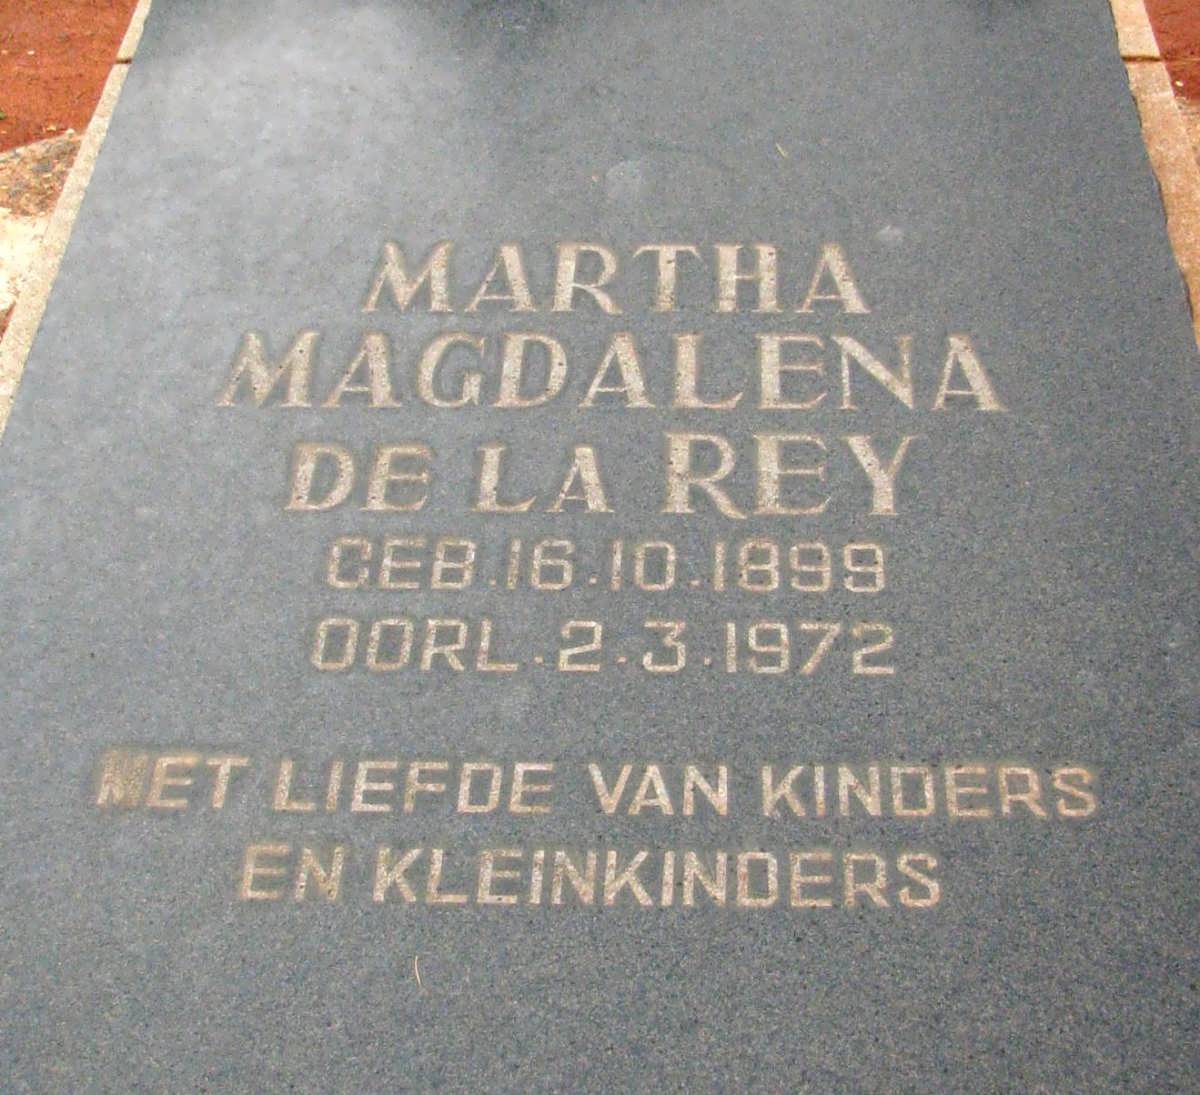 REY Martha Magdalena, de la 1899-1972